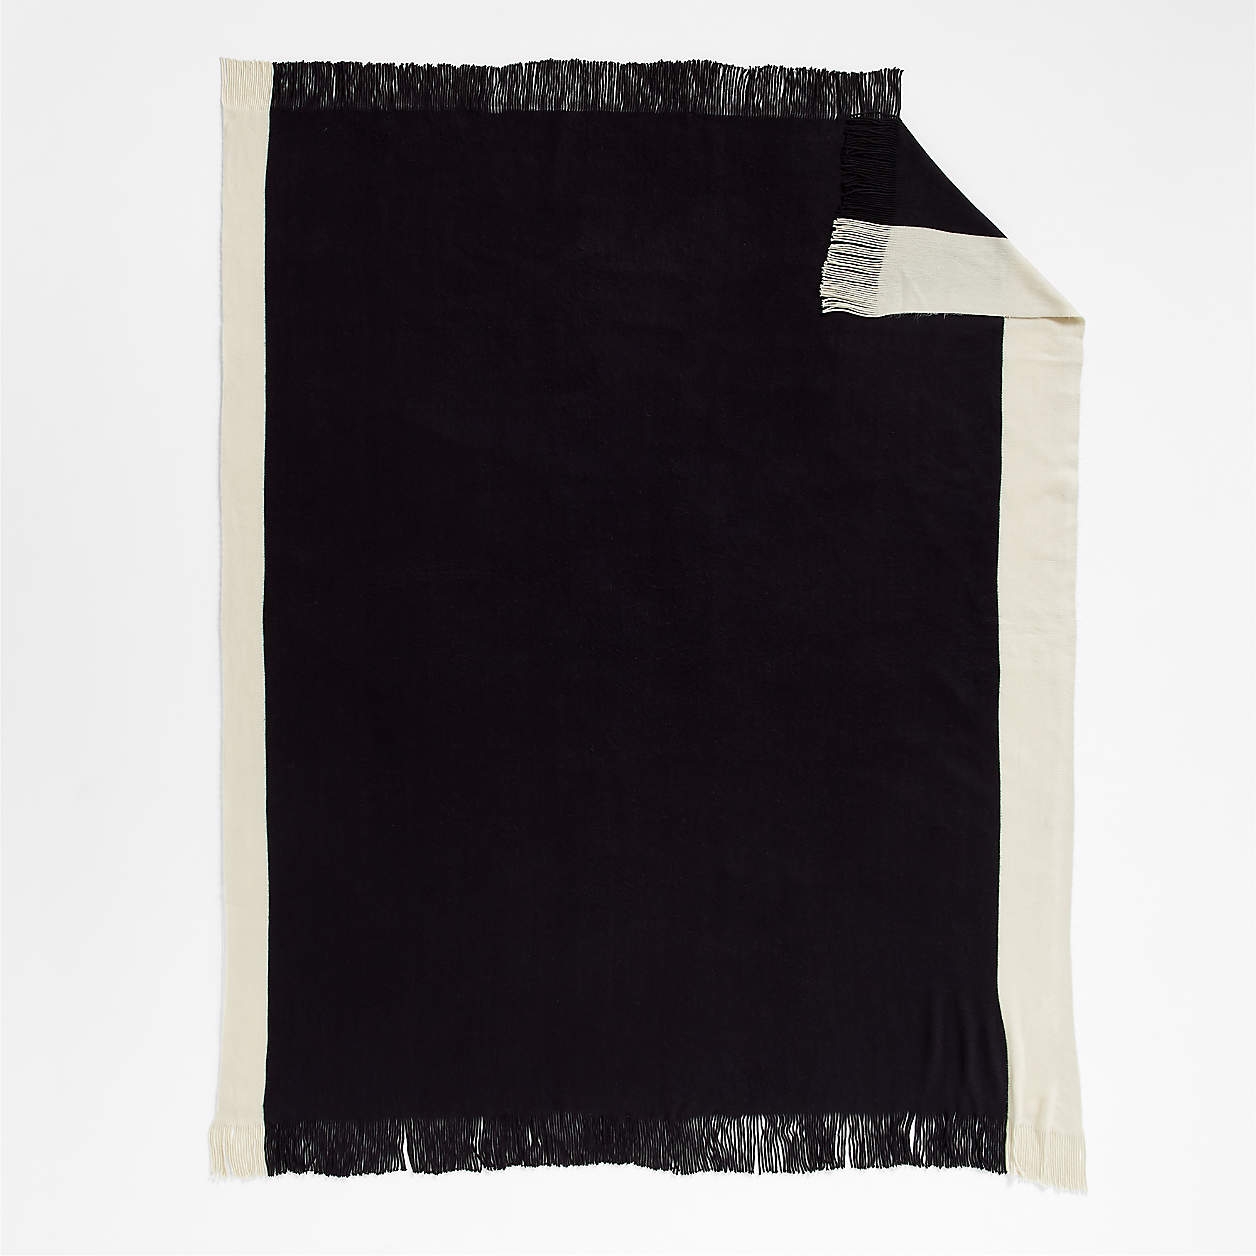 Tepi 70"x55" Black Throw Blanket - Image 3